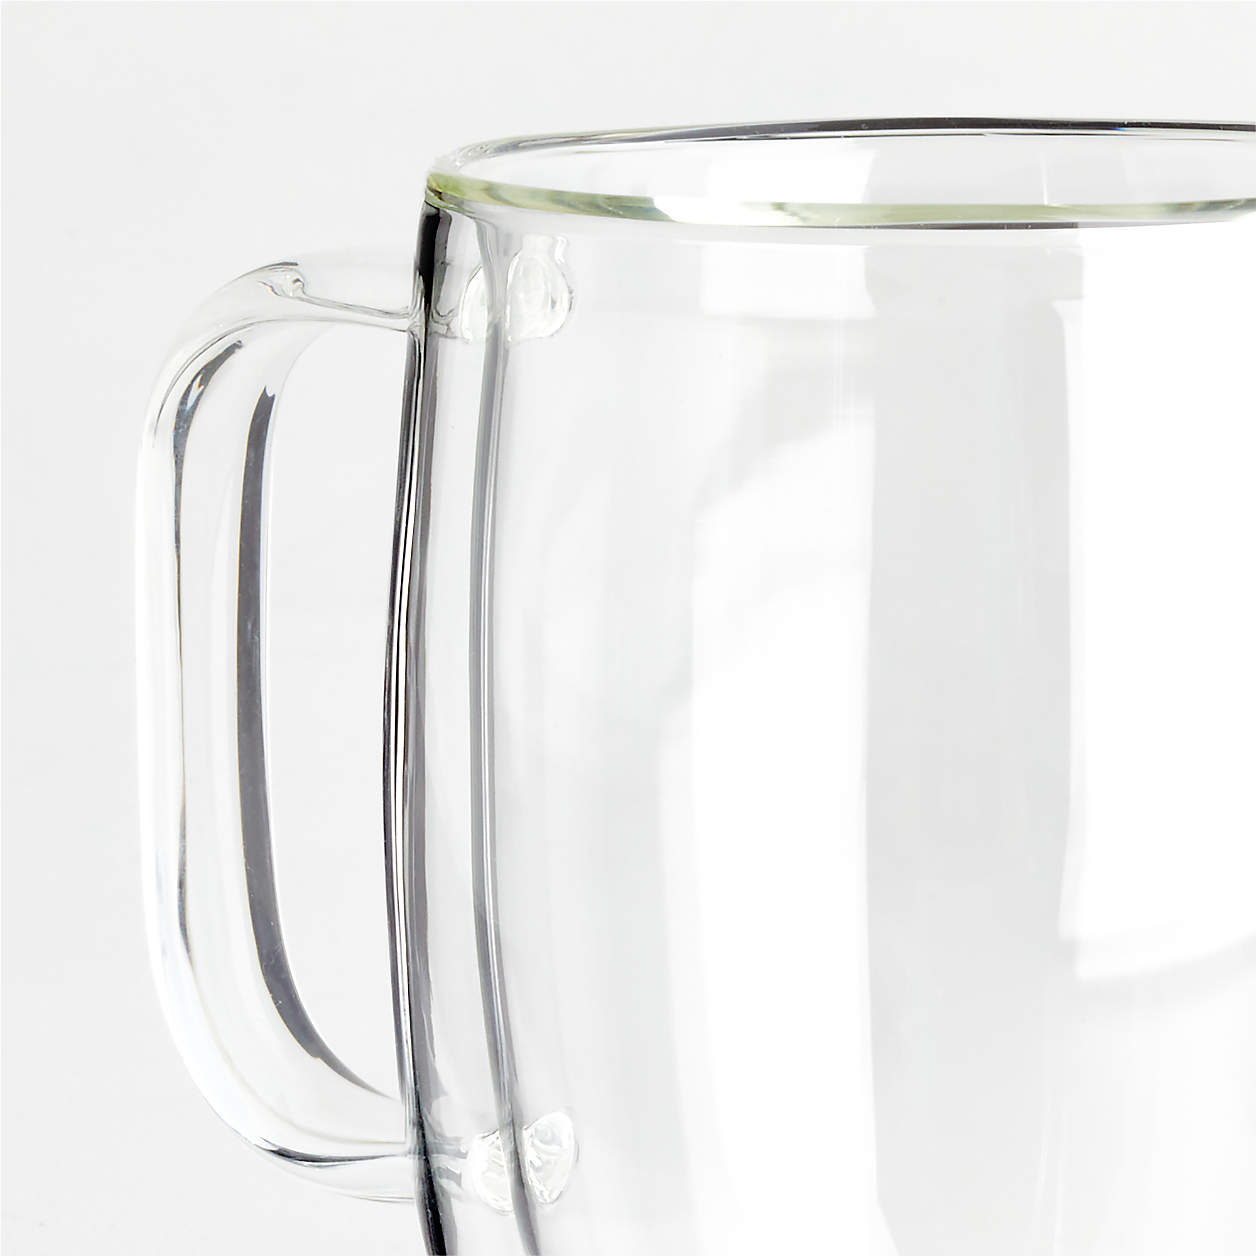 close-up of rim and handle of serrento mug.